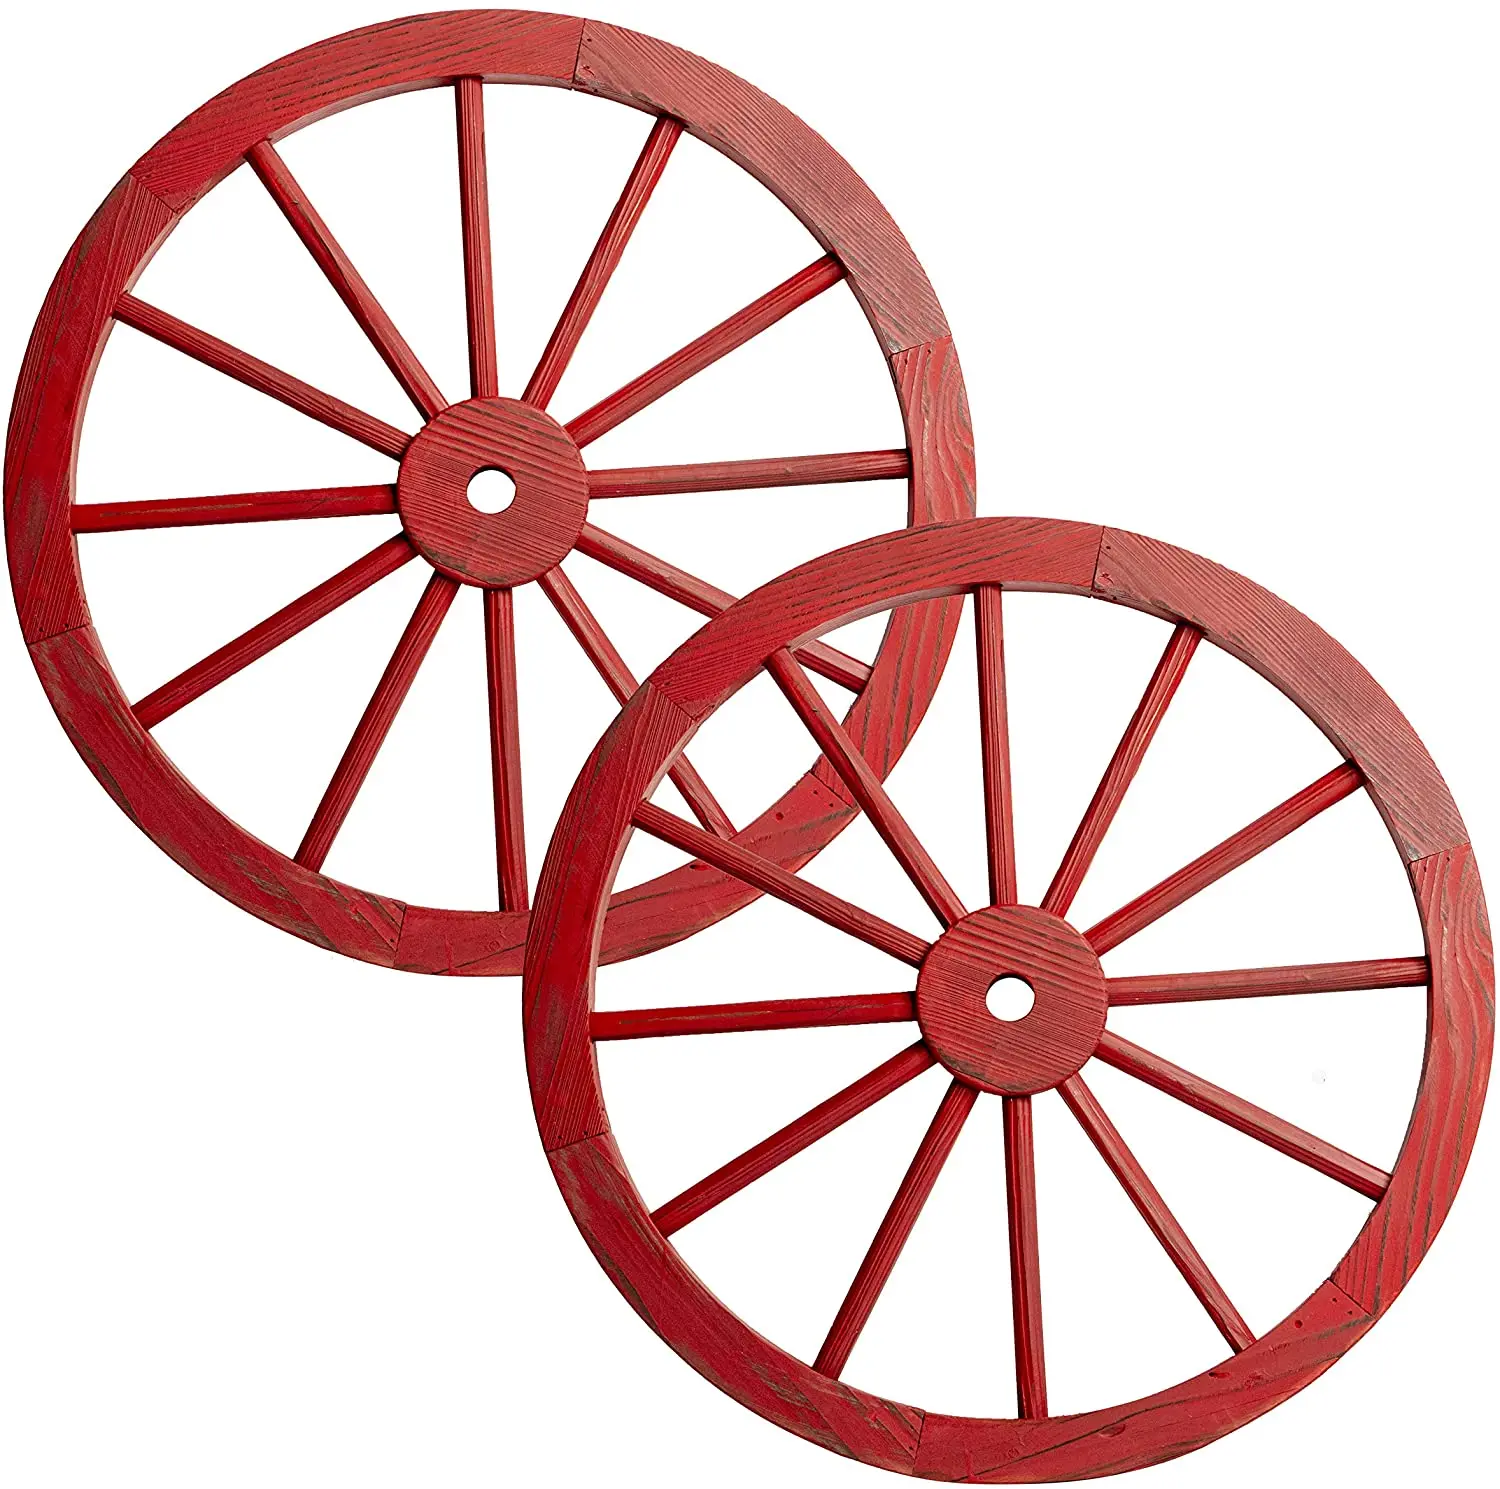 Antique wagon wheel wrench